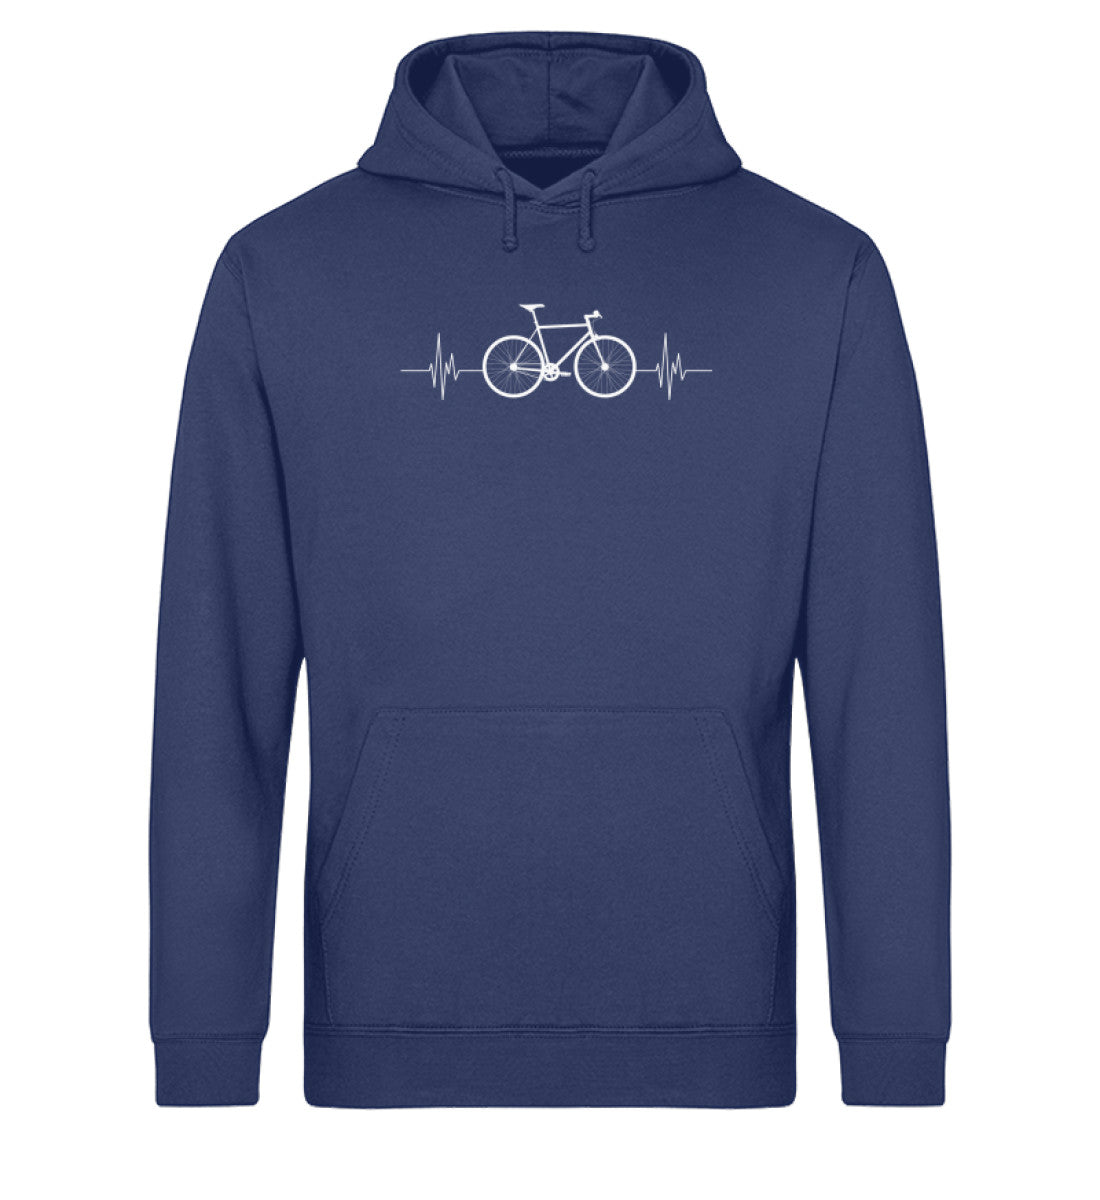 Fahrrad Herzschlag - Unisex Organic Hoodie fahrrad mountainbike Navyblau